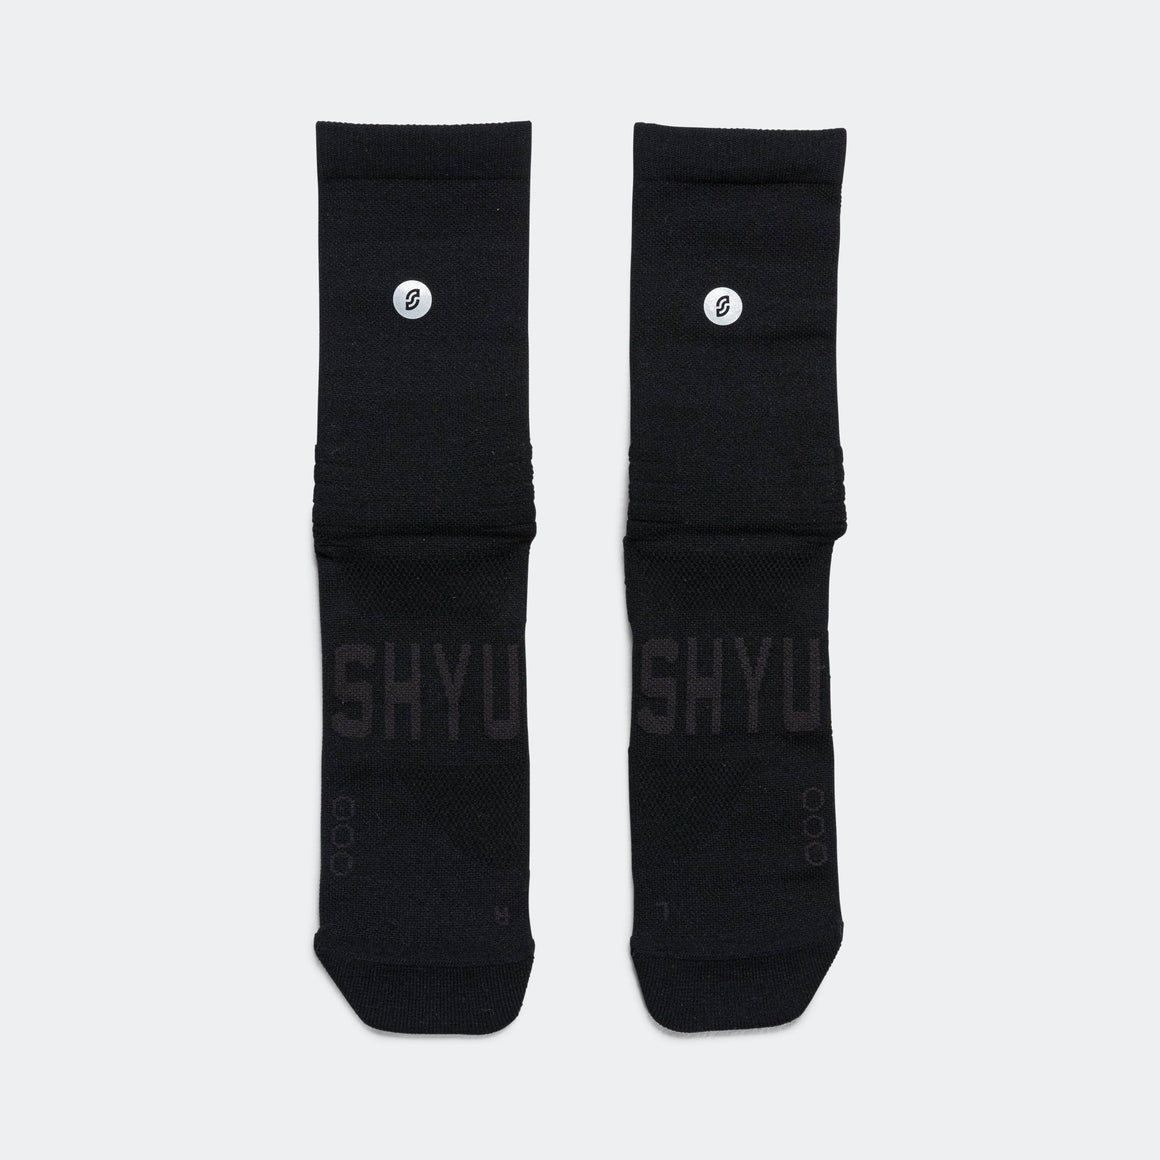 Shyu - Half Crew Racing Socks - Black/Black/Black - Up There Athletics